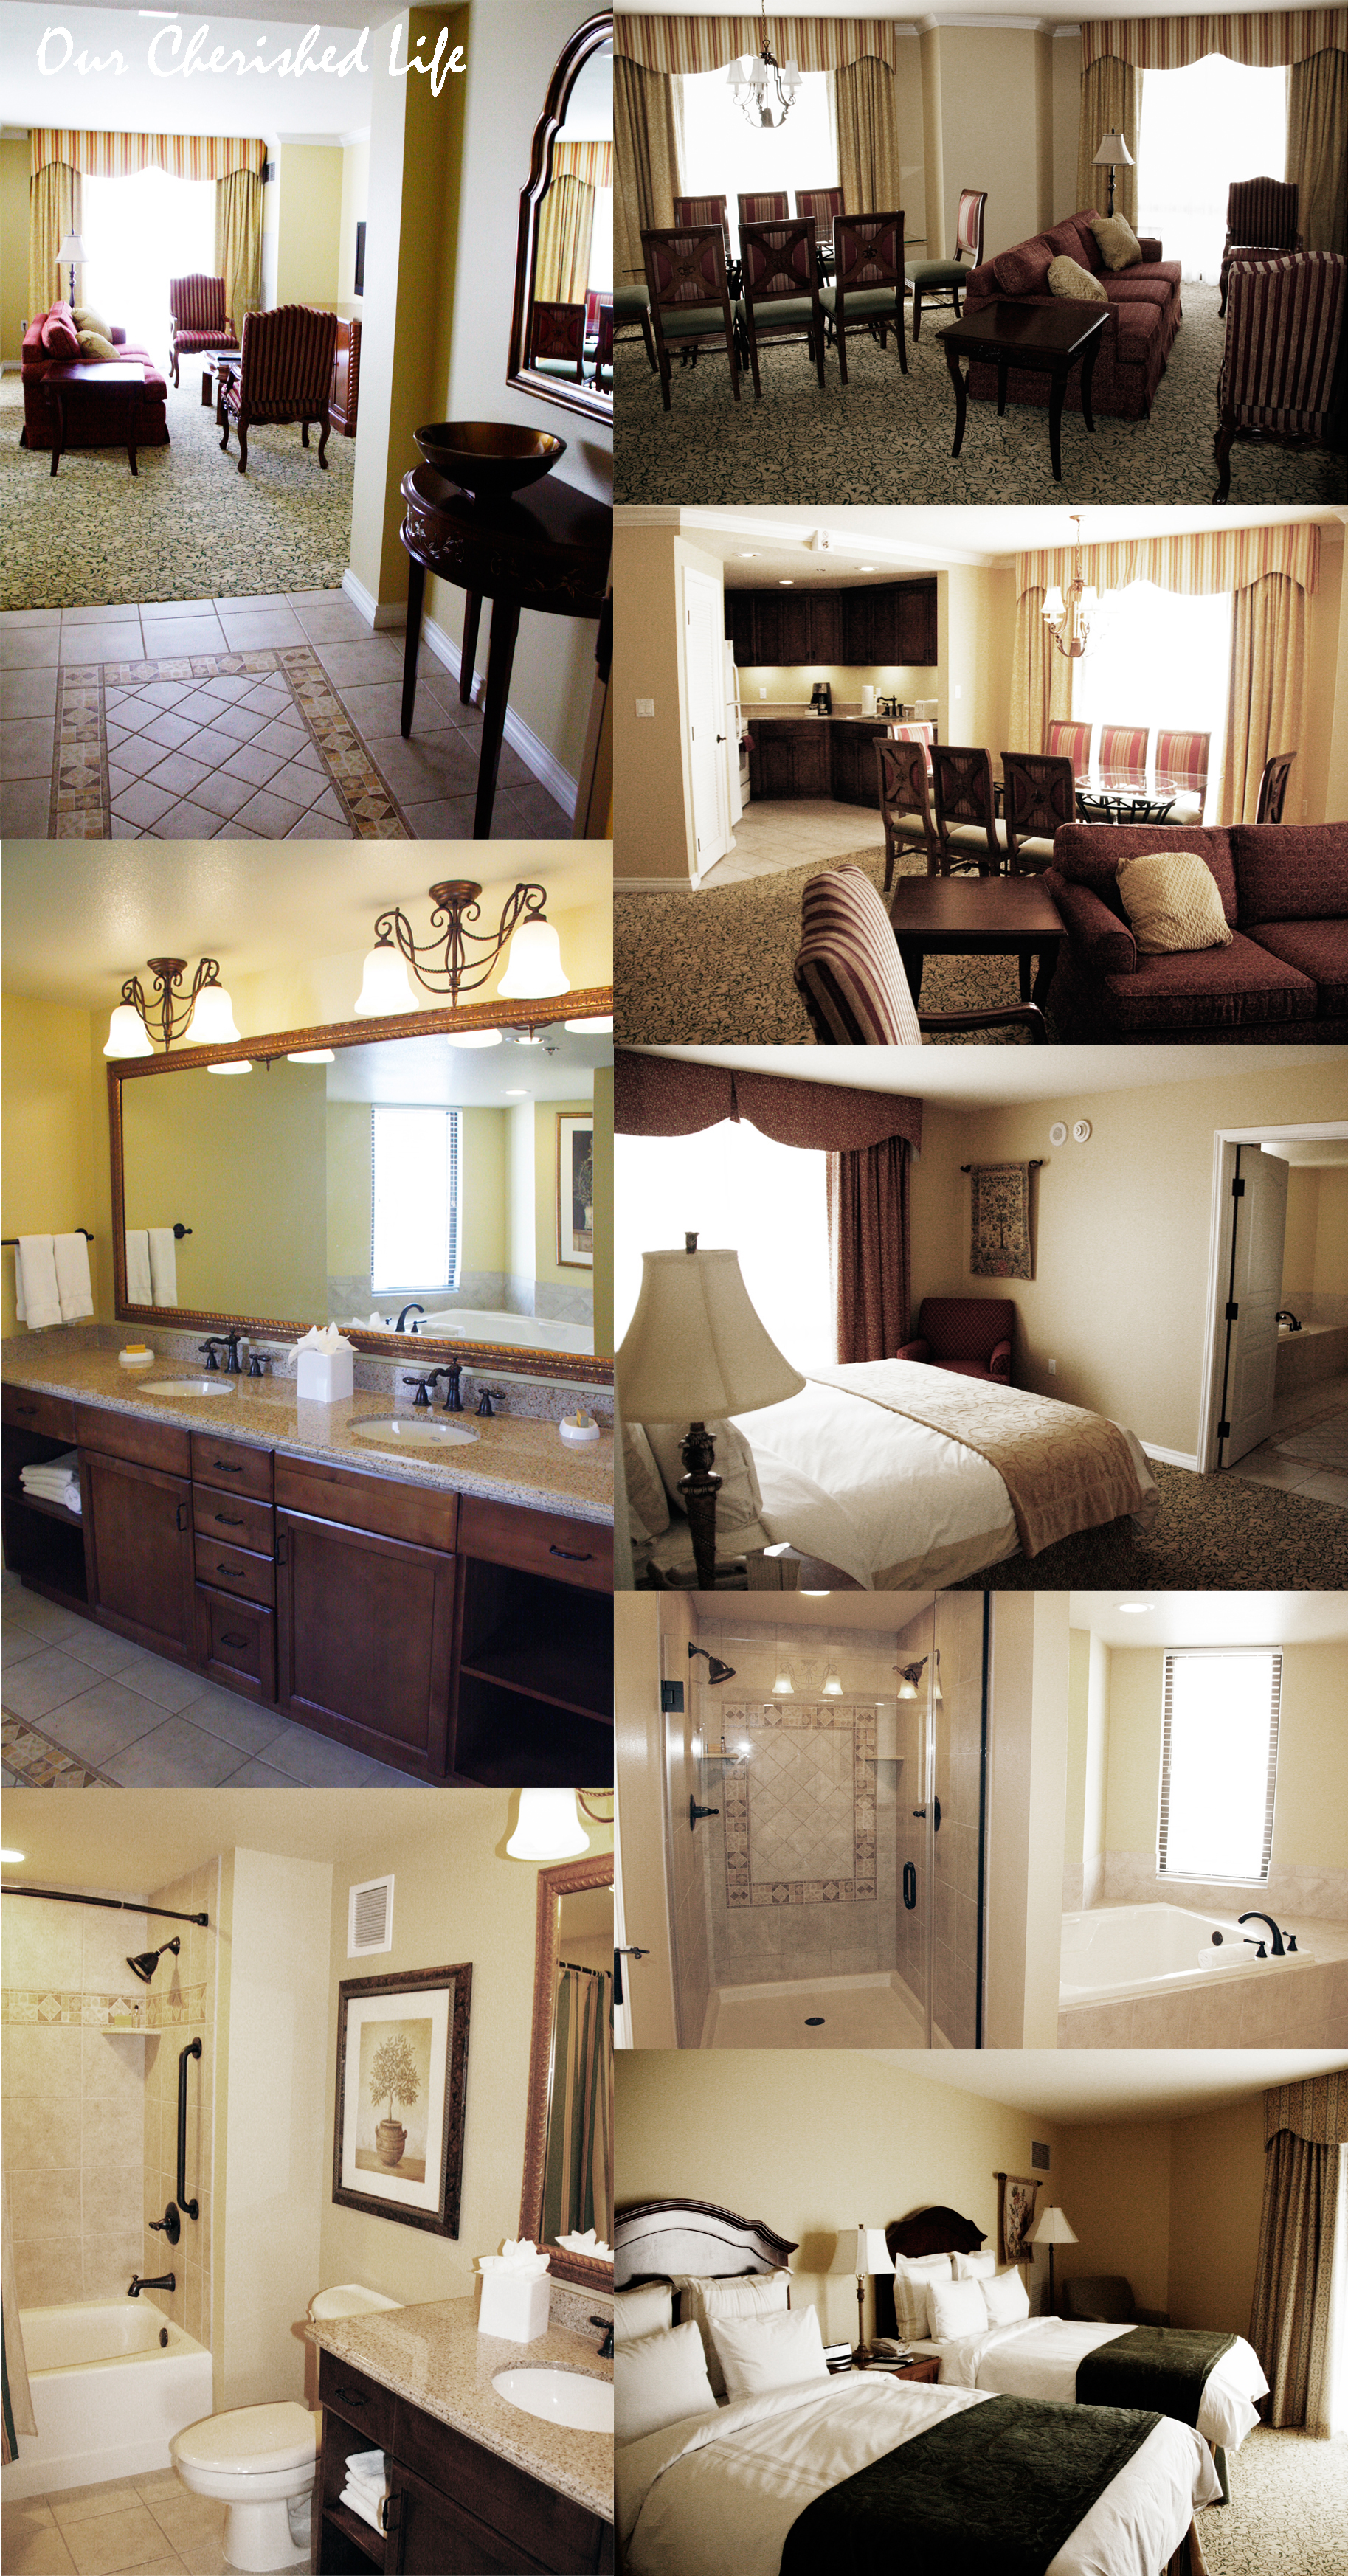 3 bedroom room tour Las Vegas Marriott's Grand Chateau 